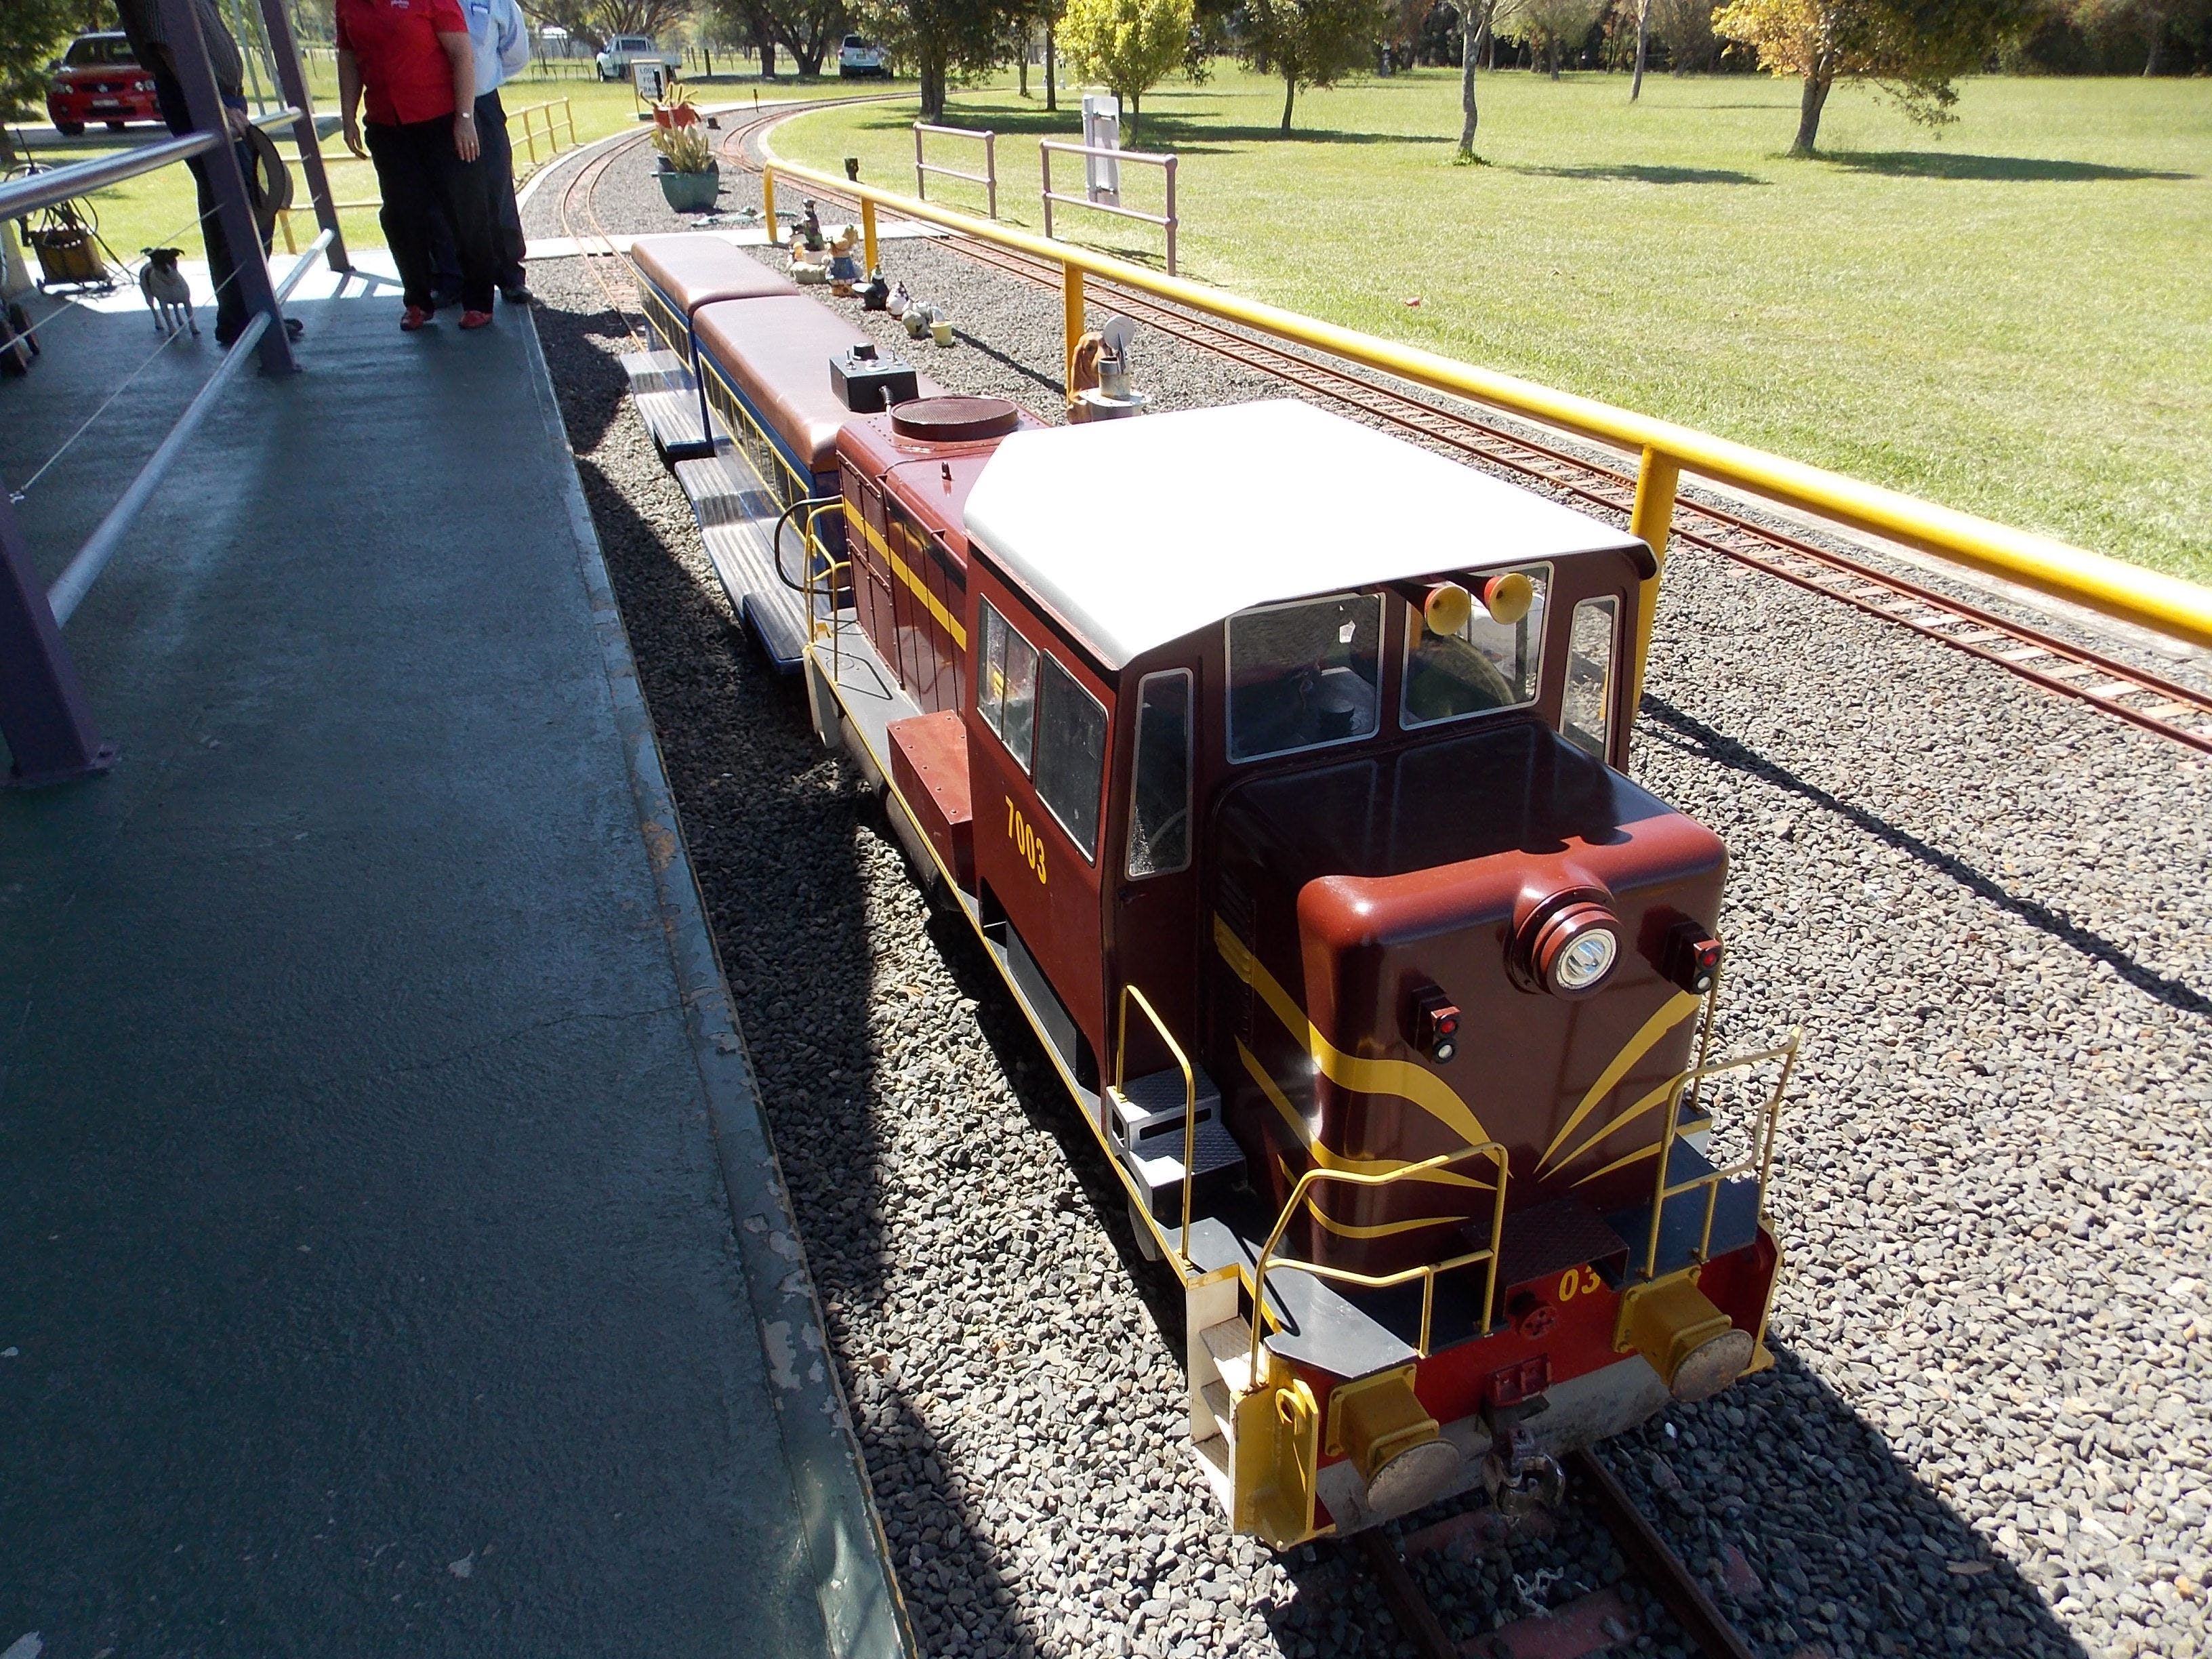 Penwood Miniature Railway - Accommodation Nelson Bay